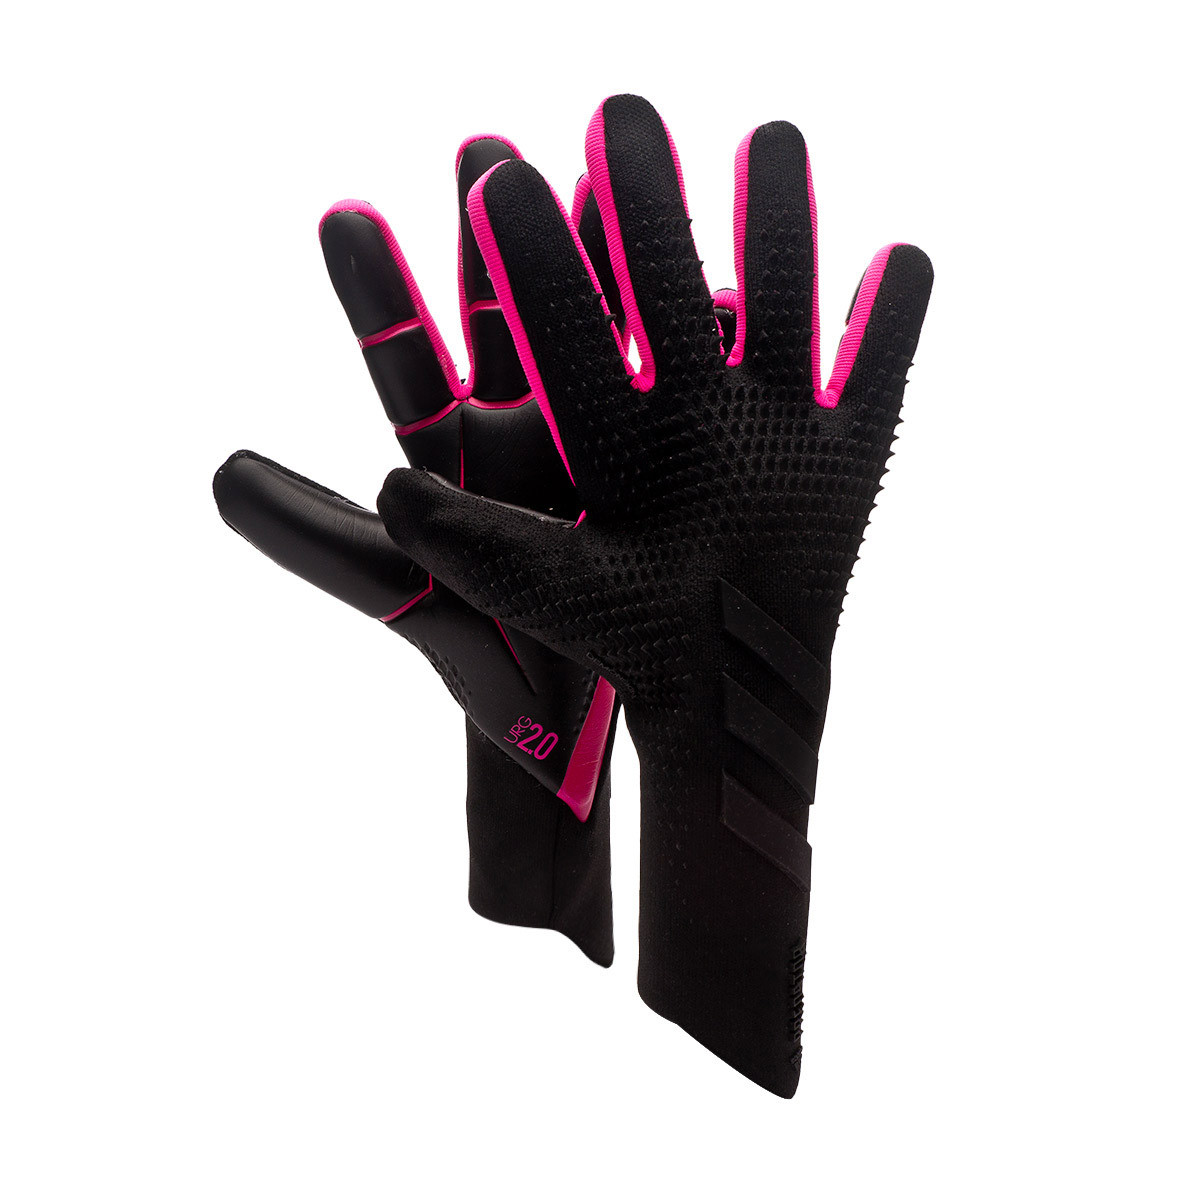 adidas predator goalkeeper gloves pink